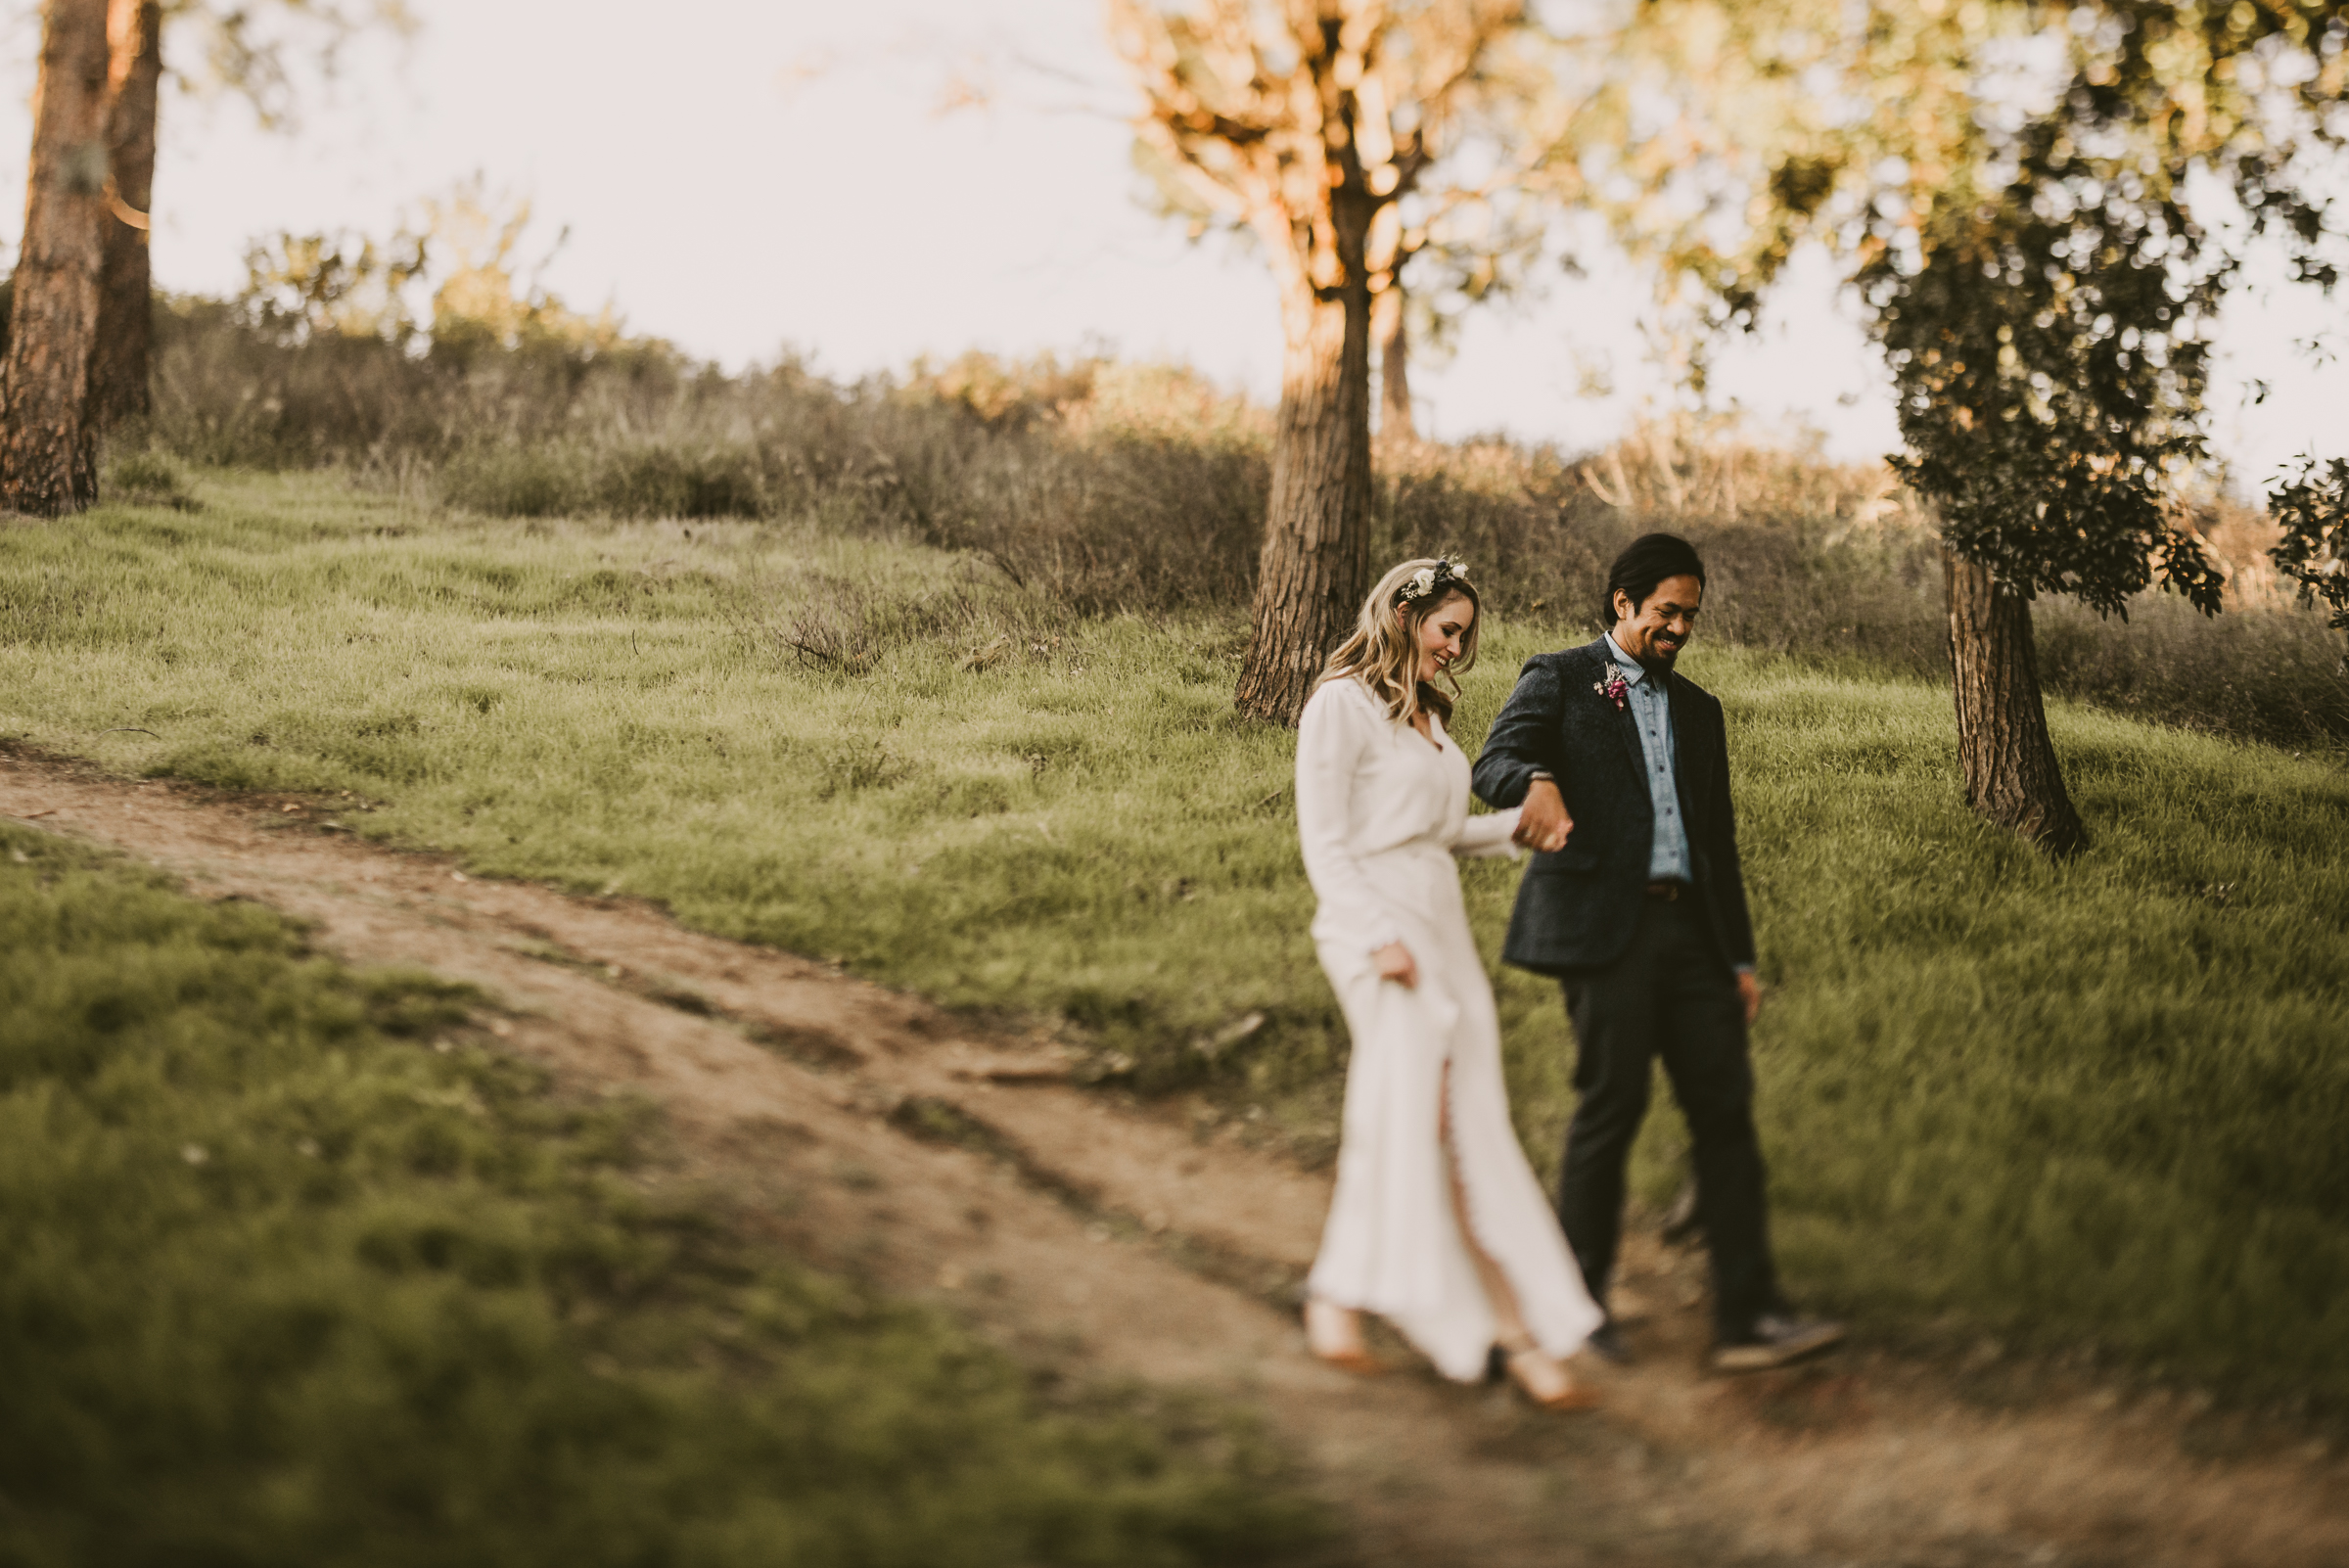 ©Isaiah + Taylor Photography - Intimate Elopement, Eaton Canyon, Los Angeles Wedding Photographer-62.jpg